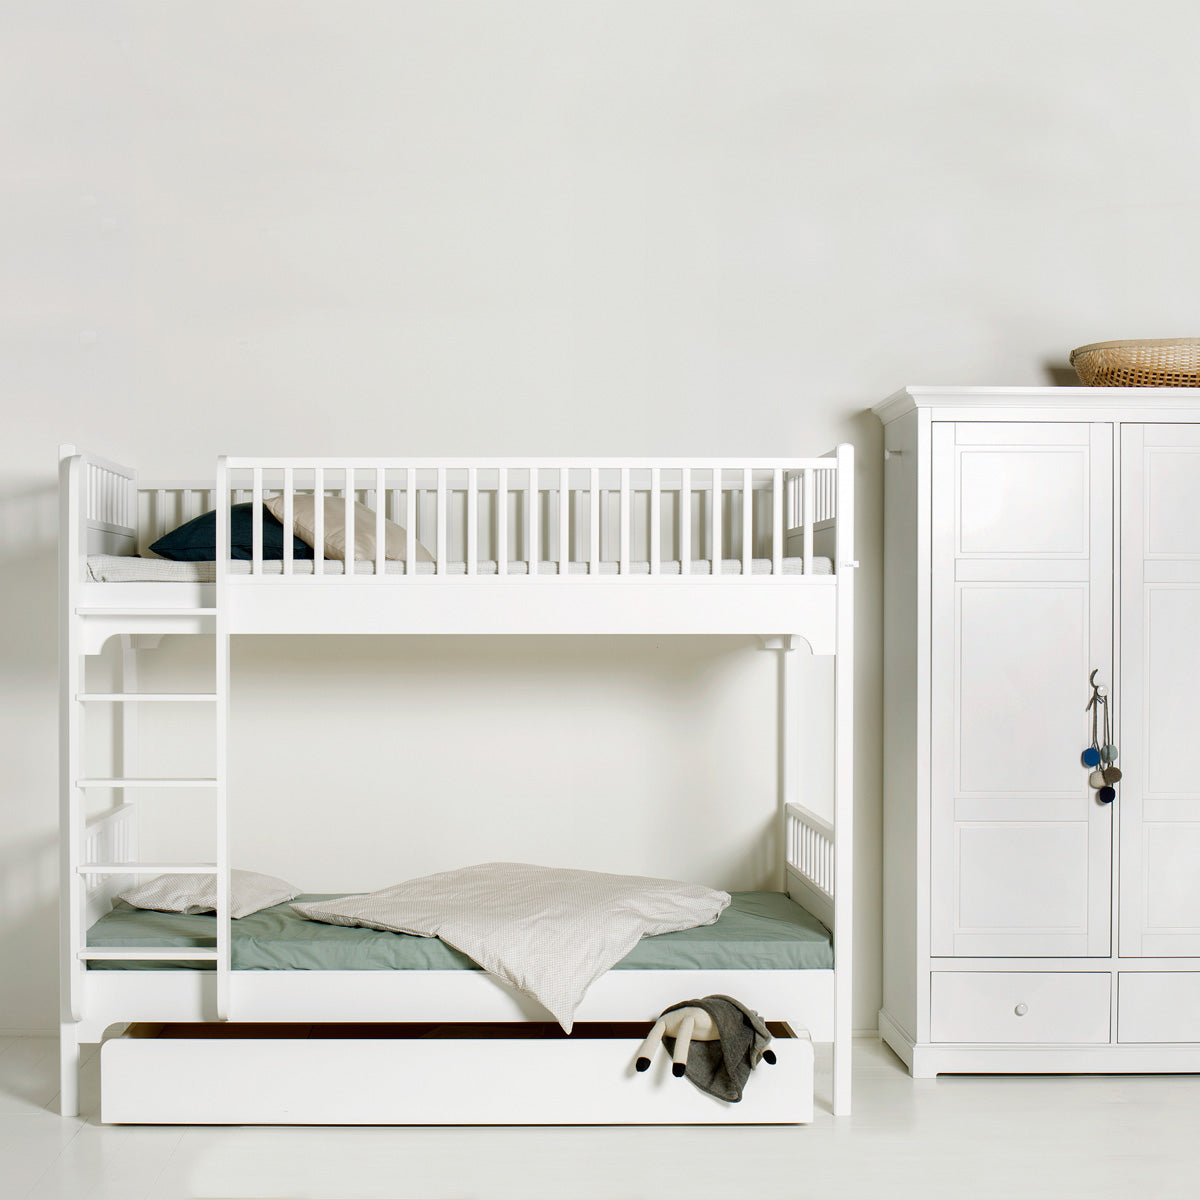 Oliver Furniture Seaside bunk bed, 90 x 200 cm, white